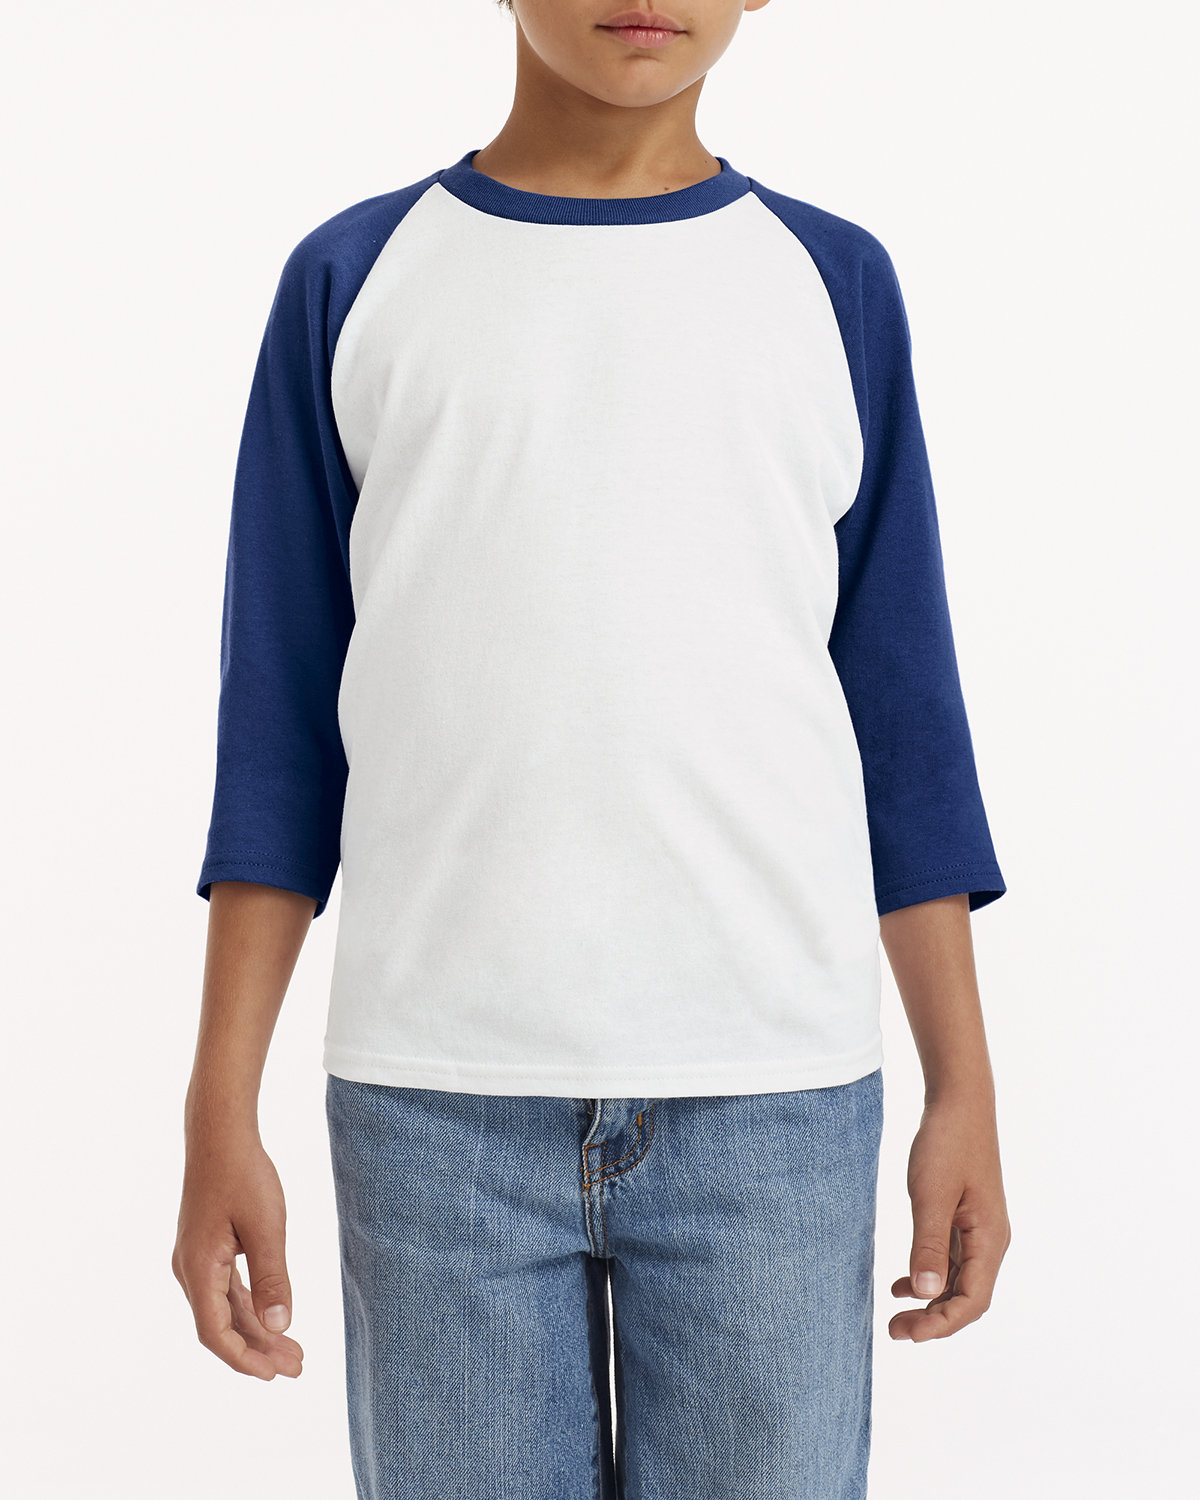 Gildan Youth Heavy Cotton Long Sleeve T-Shirt